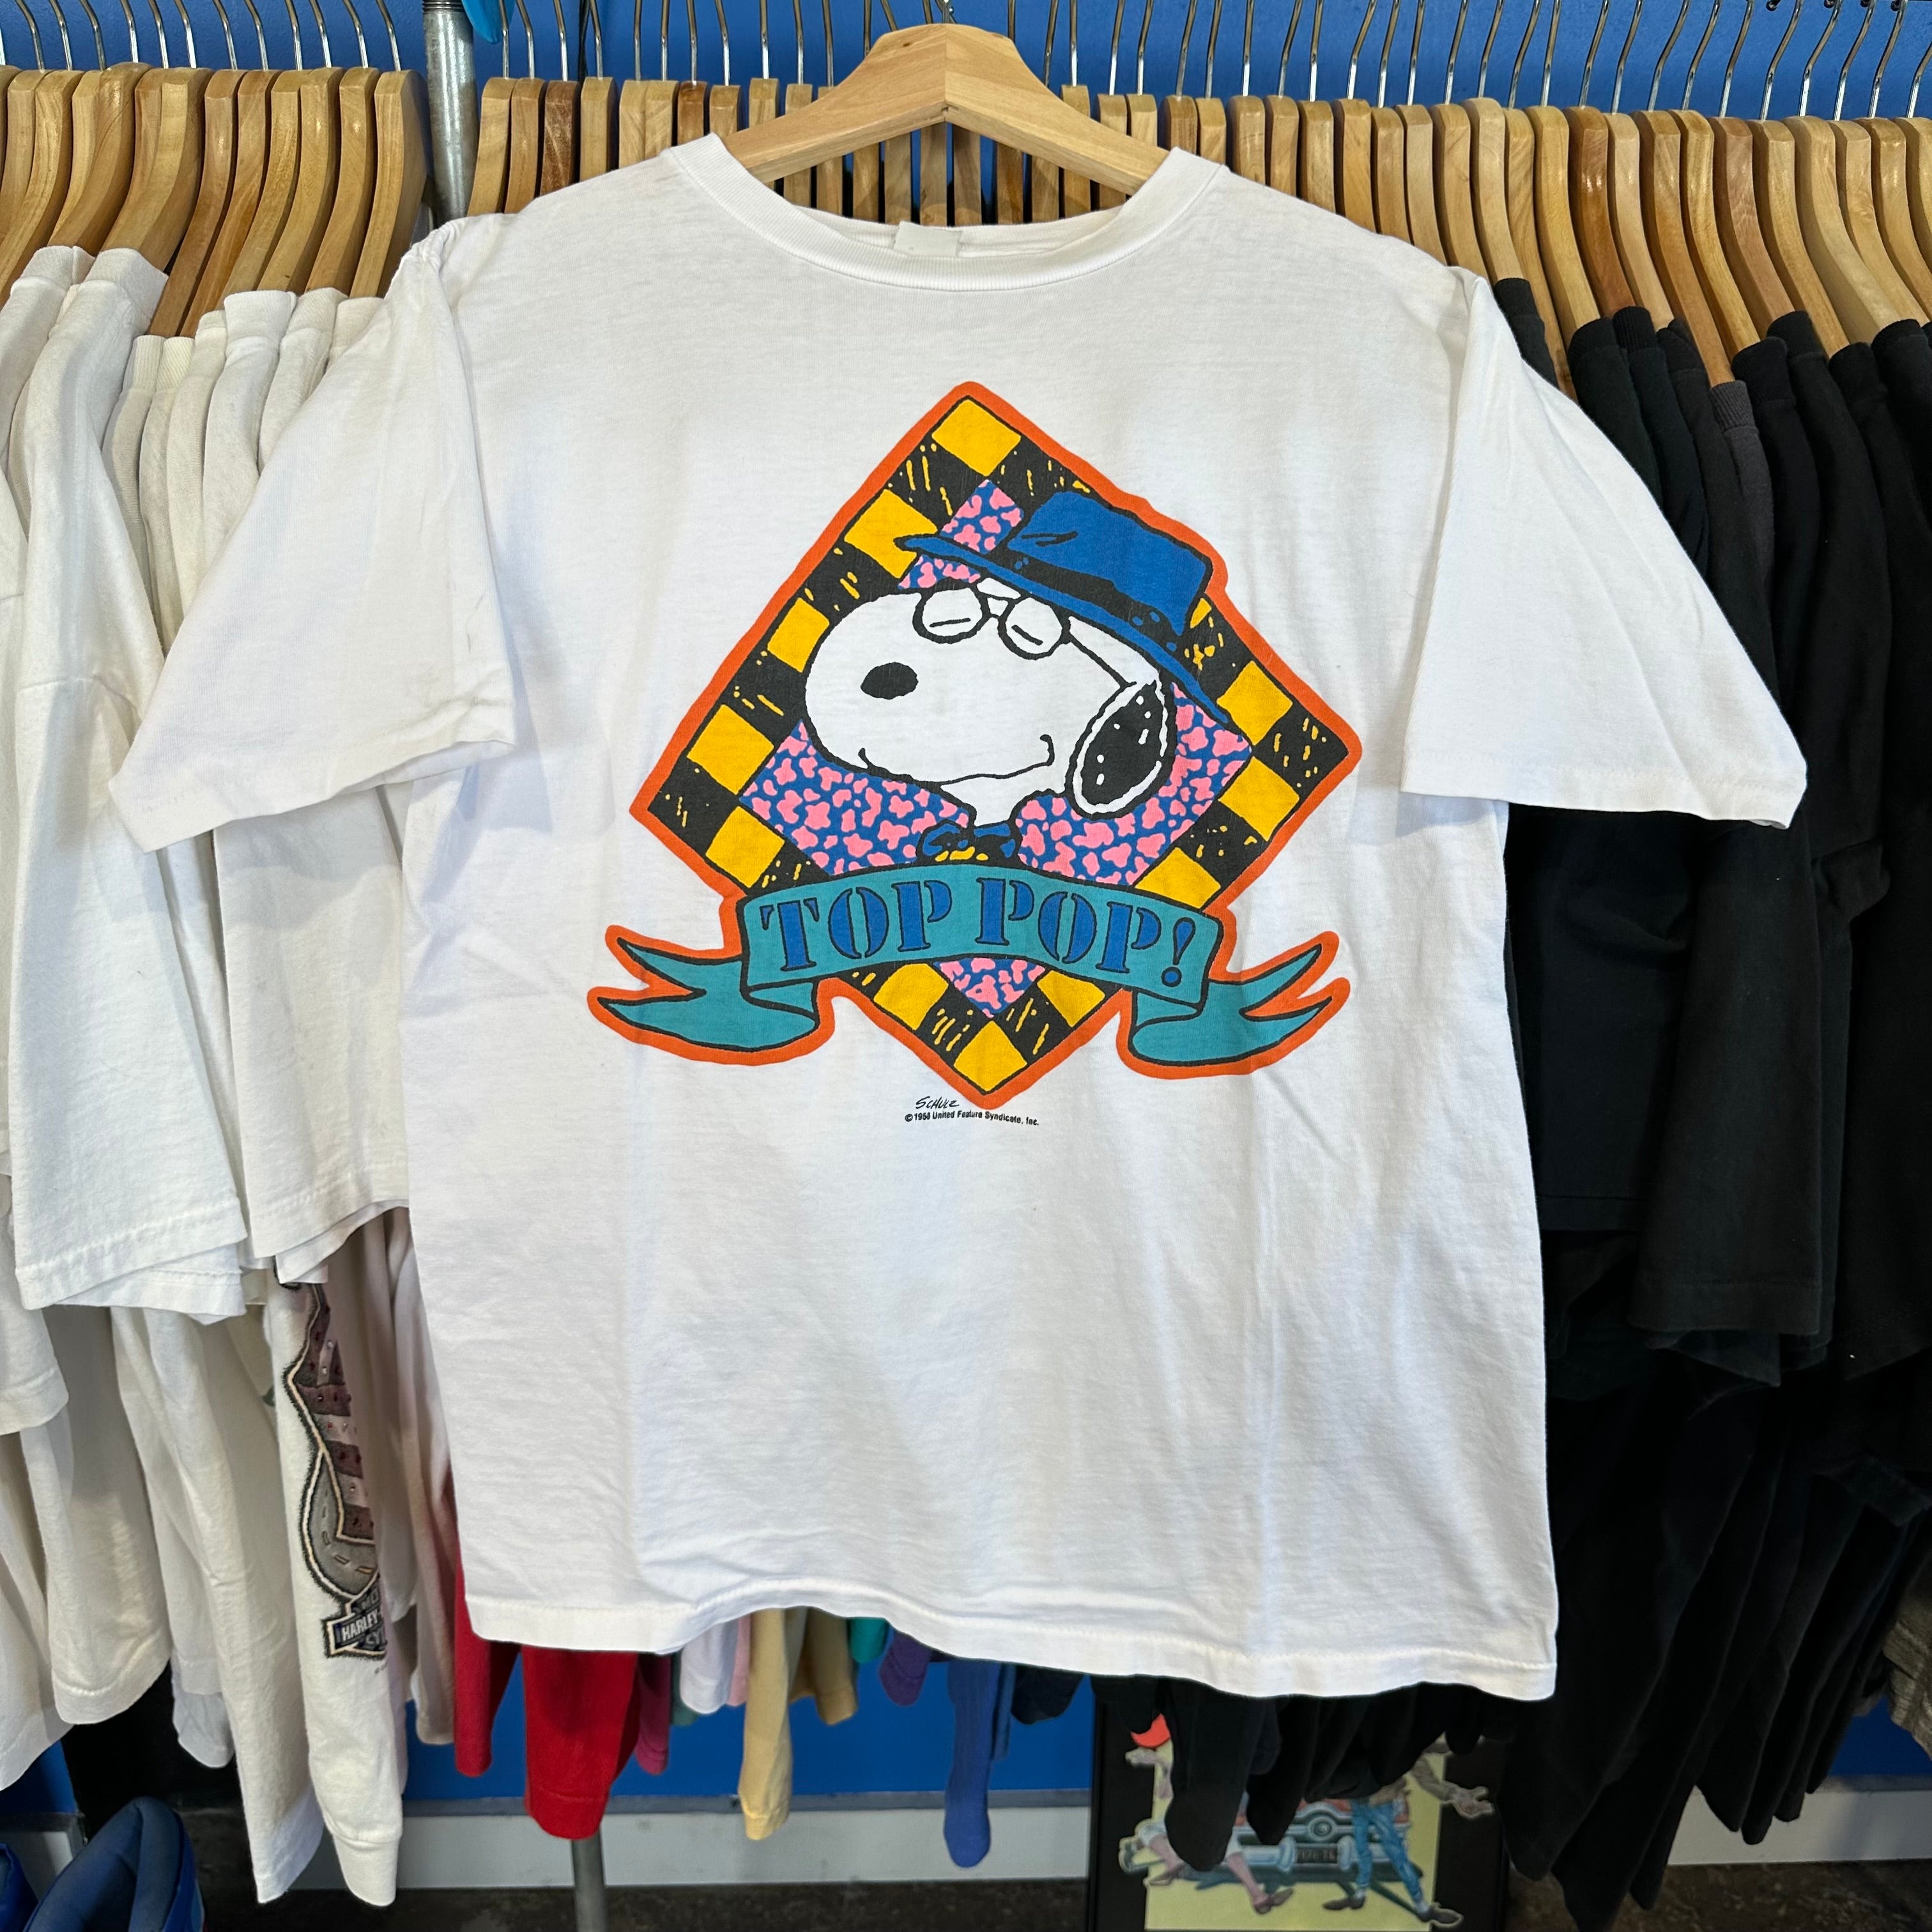 Top Pop Snoopy T-Shirt